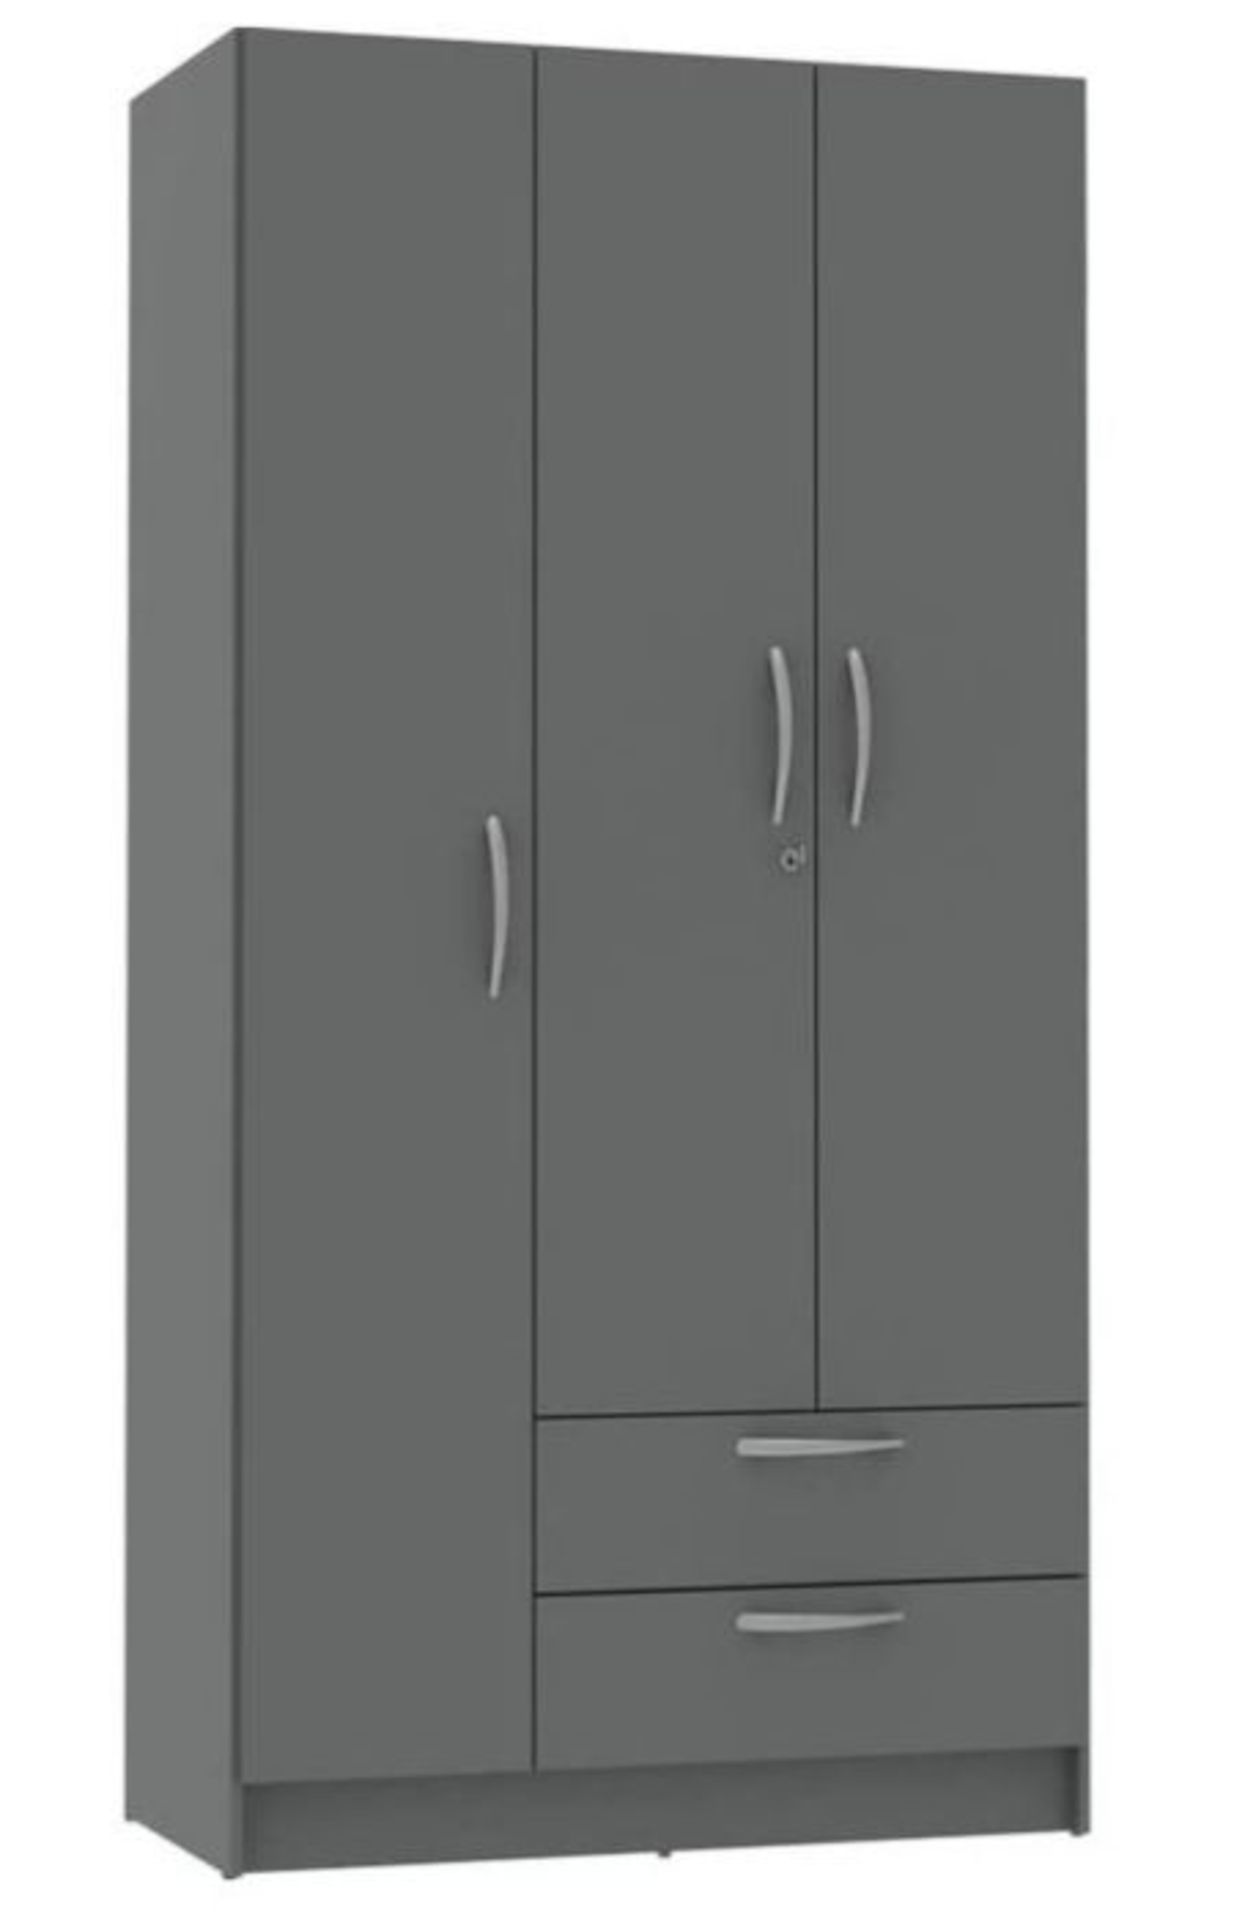 1 X CEARA 3-DOOR WARDROBE WITH 2 DRAWERS - GREY / BRAND NEW